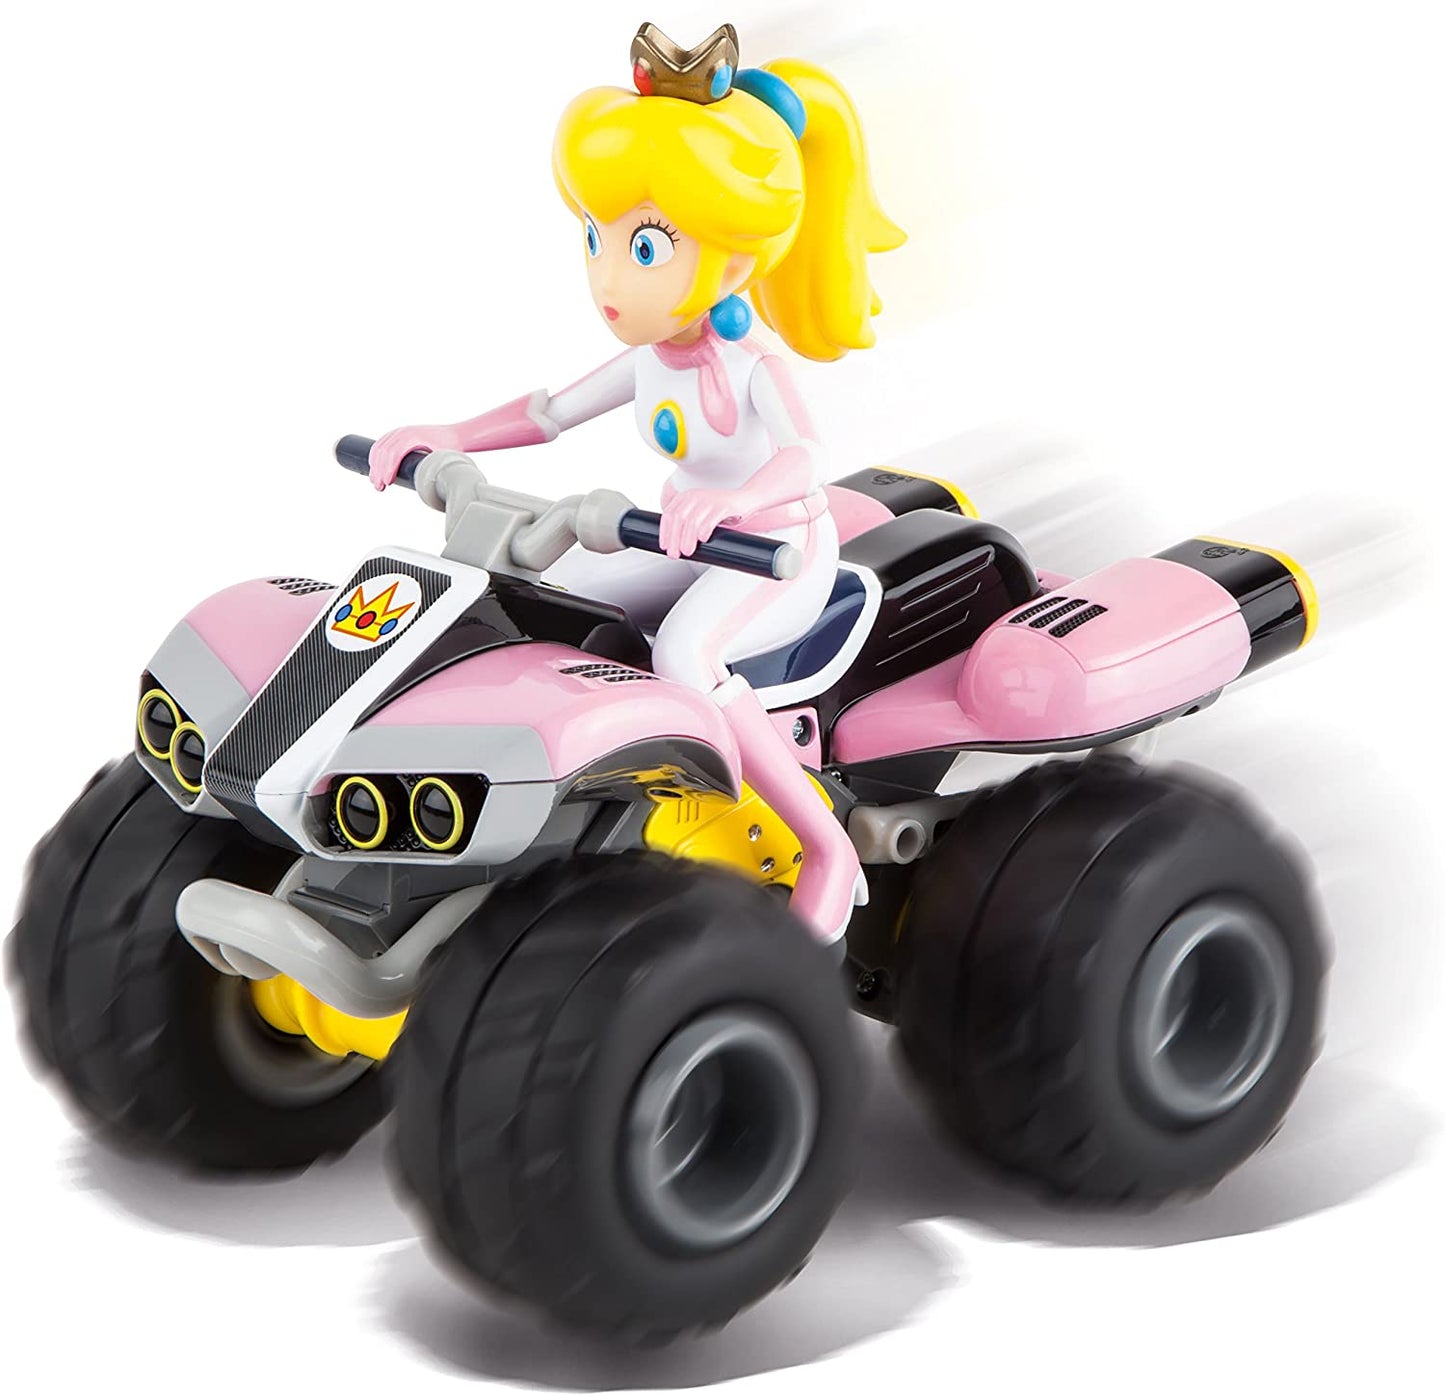 Carrera RC Nintendo Mario Kart 2.4 GHz Radio Remote Control Toy Car Vehicle-Peach Quad